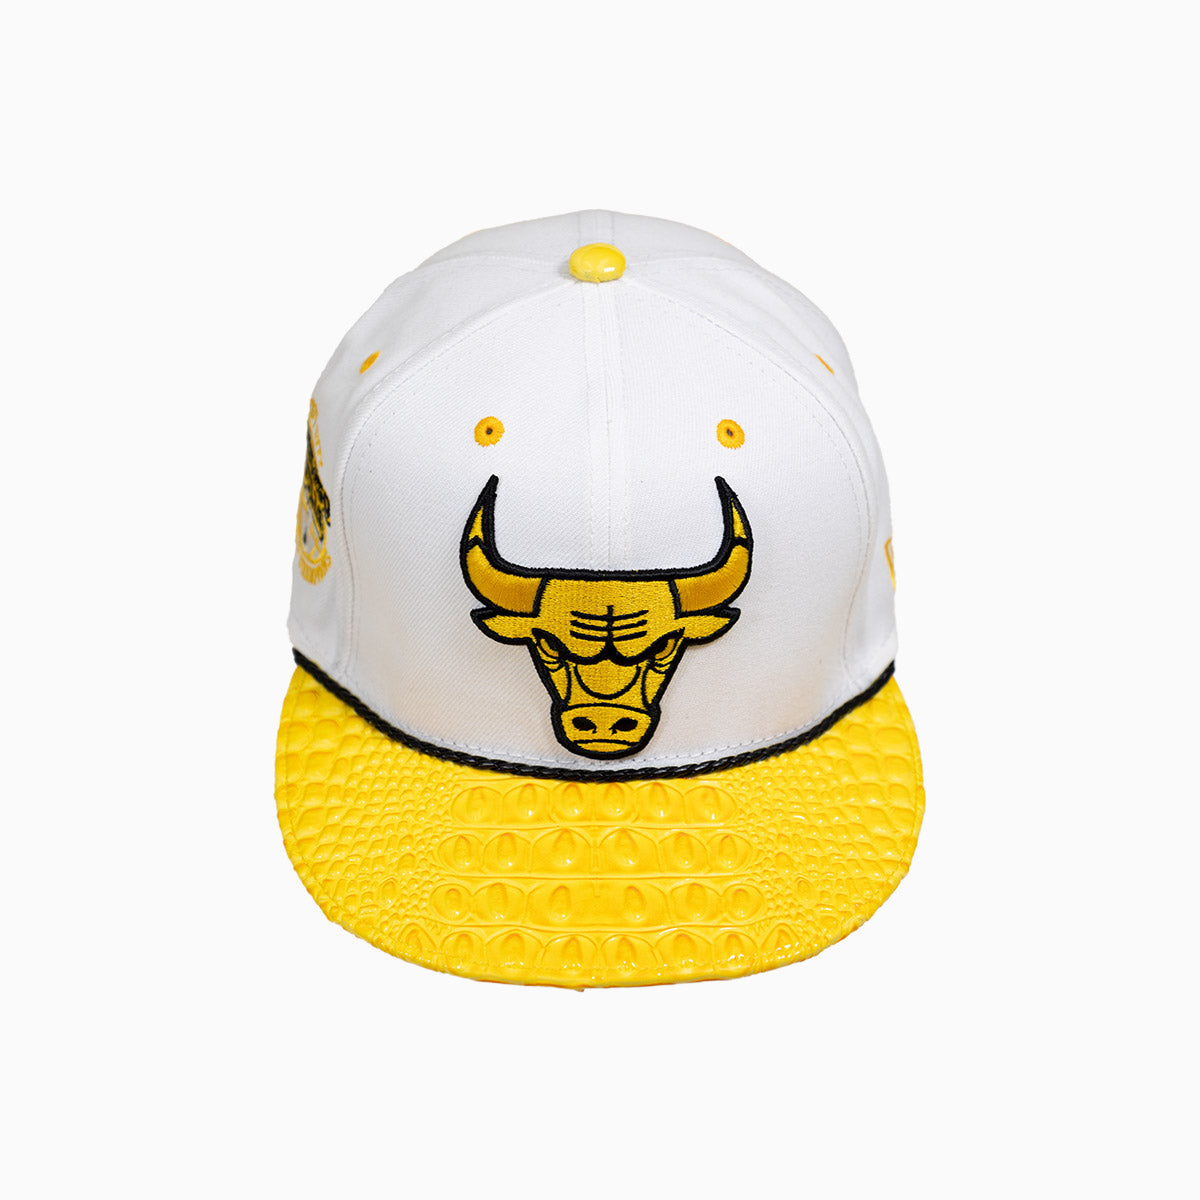 breyers-buck-50-chicago-bulls-hat-with-leather-visor-breyers-tcbh-white-yellow